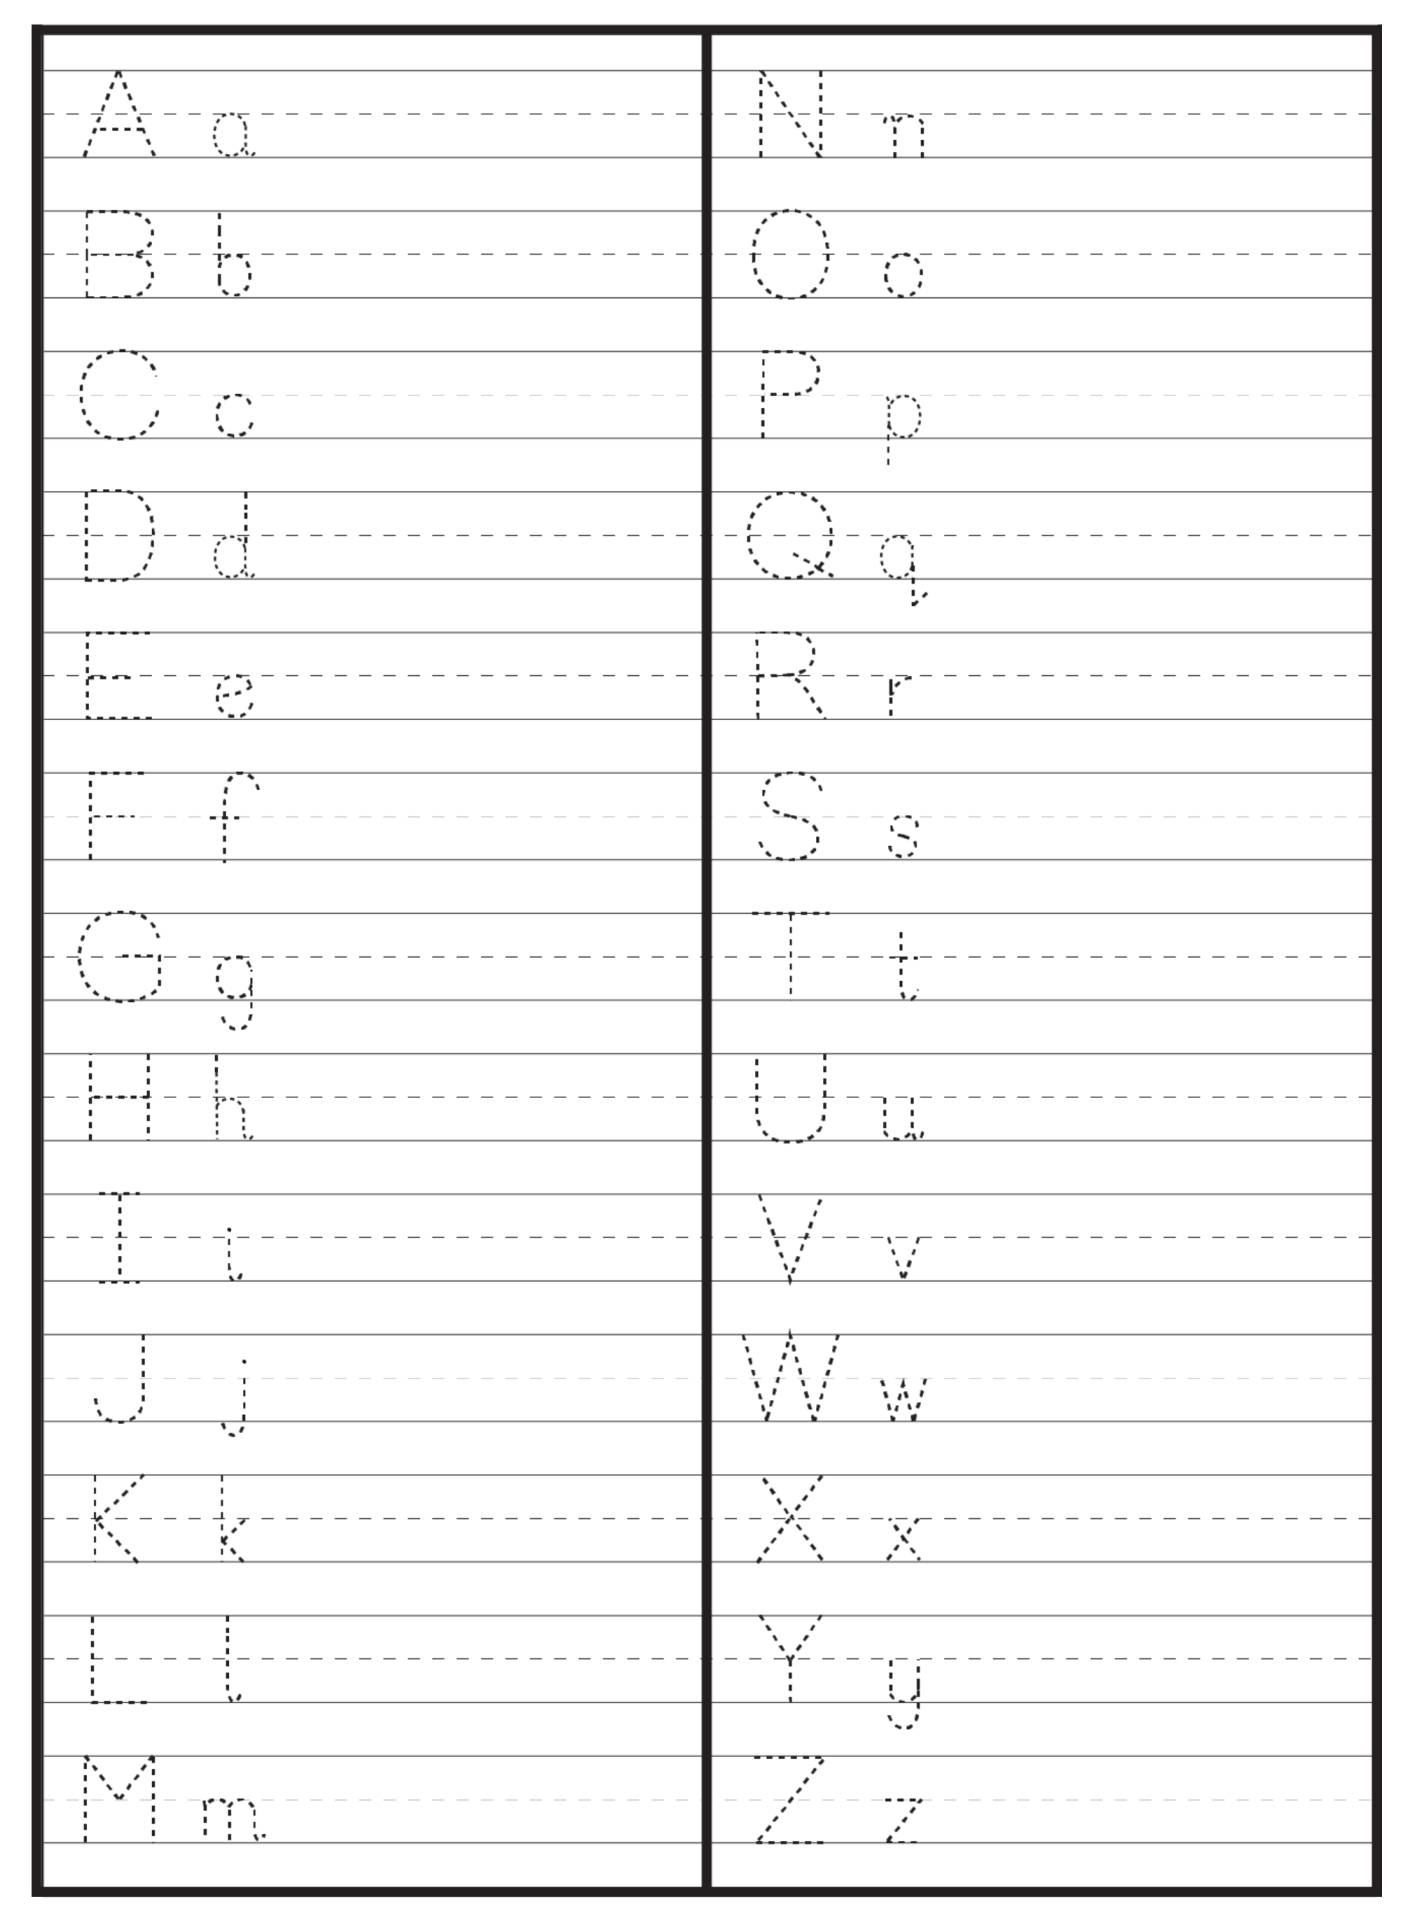 printable-alphabet-writing-practice-worksheets-alphabet-worksheets